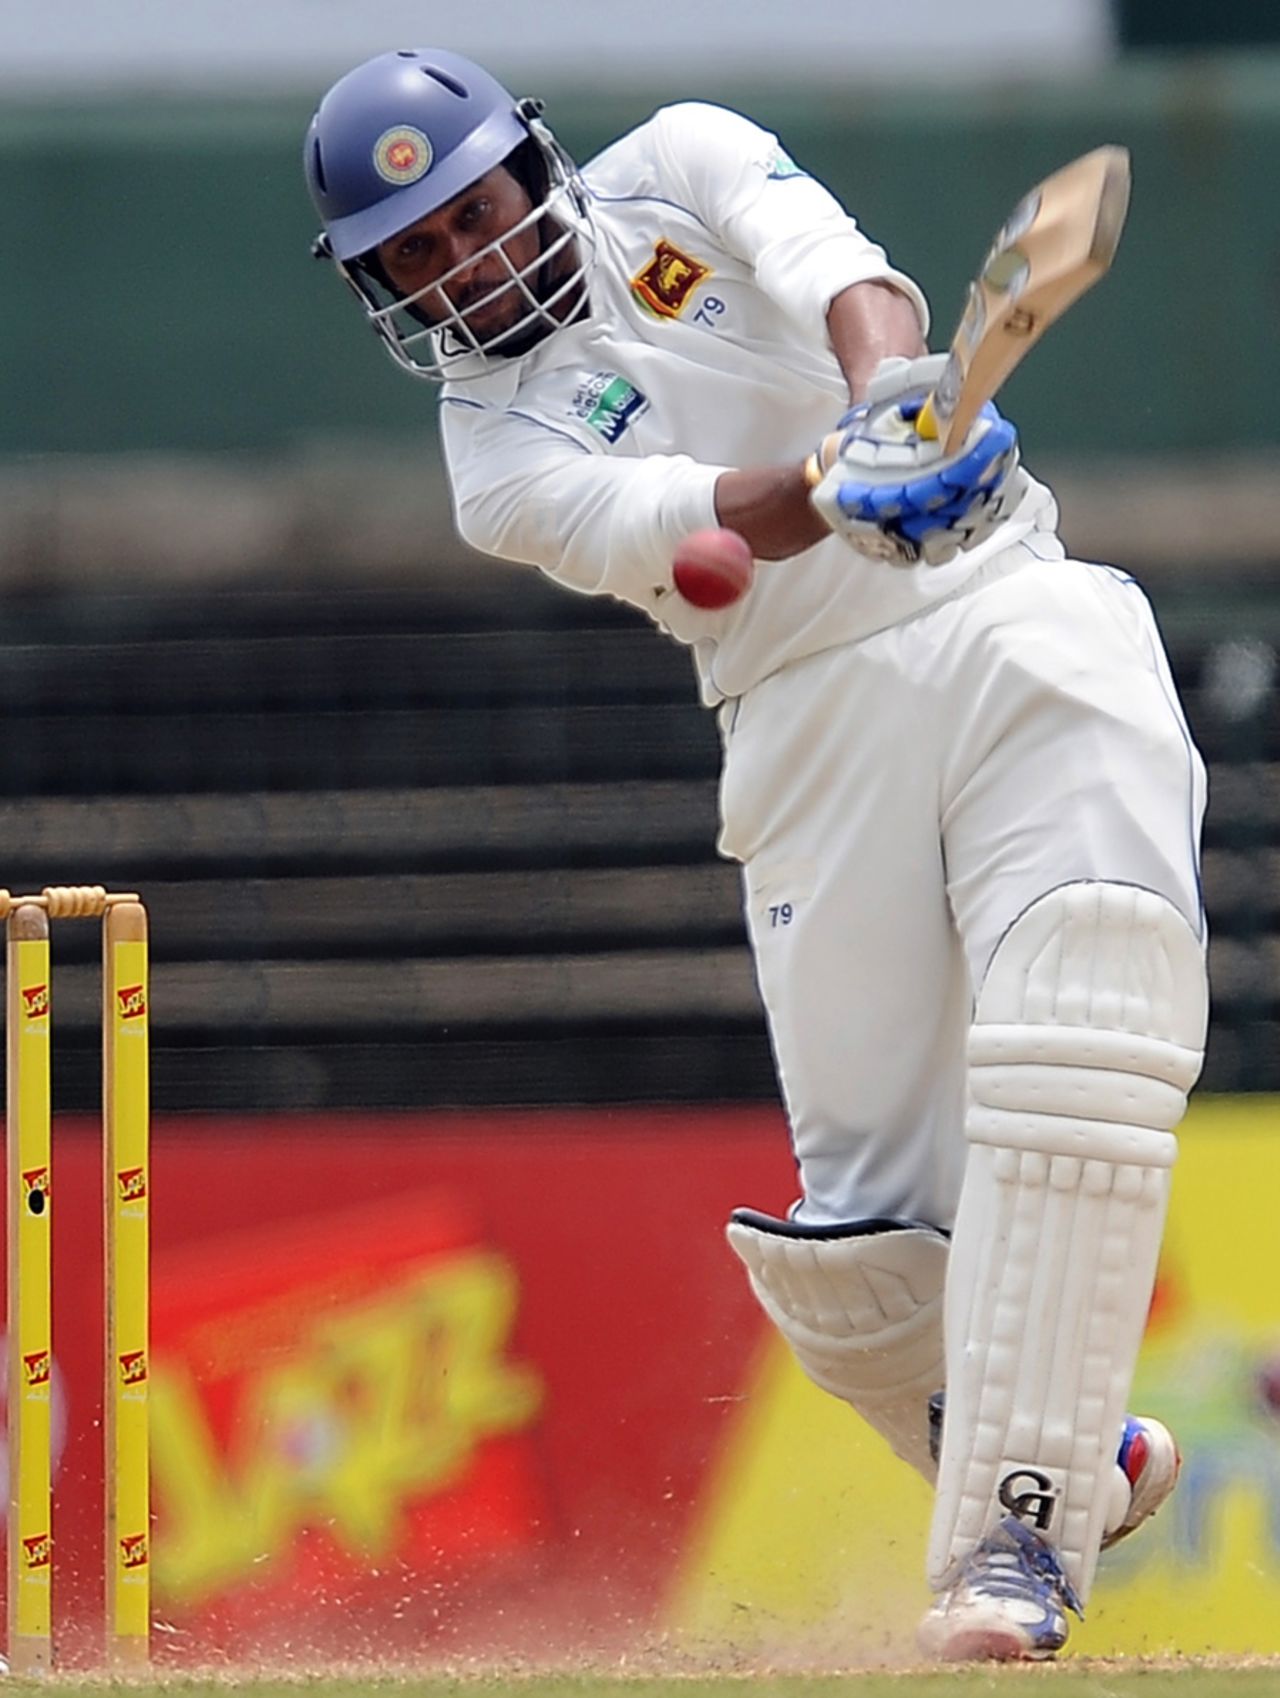 Tillakaratne Dilshan attacks, Sri Lanka v Pakistan, 2nd Test, SSC, Colombo, 3rd day, July 2, 2012